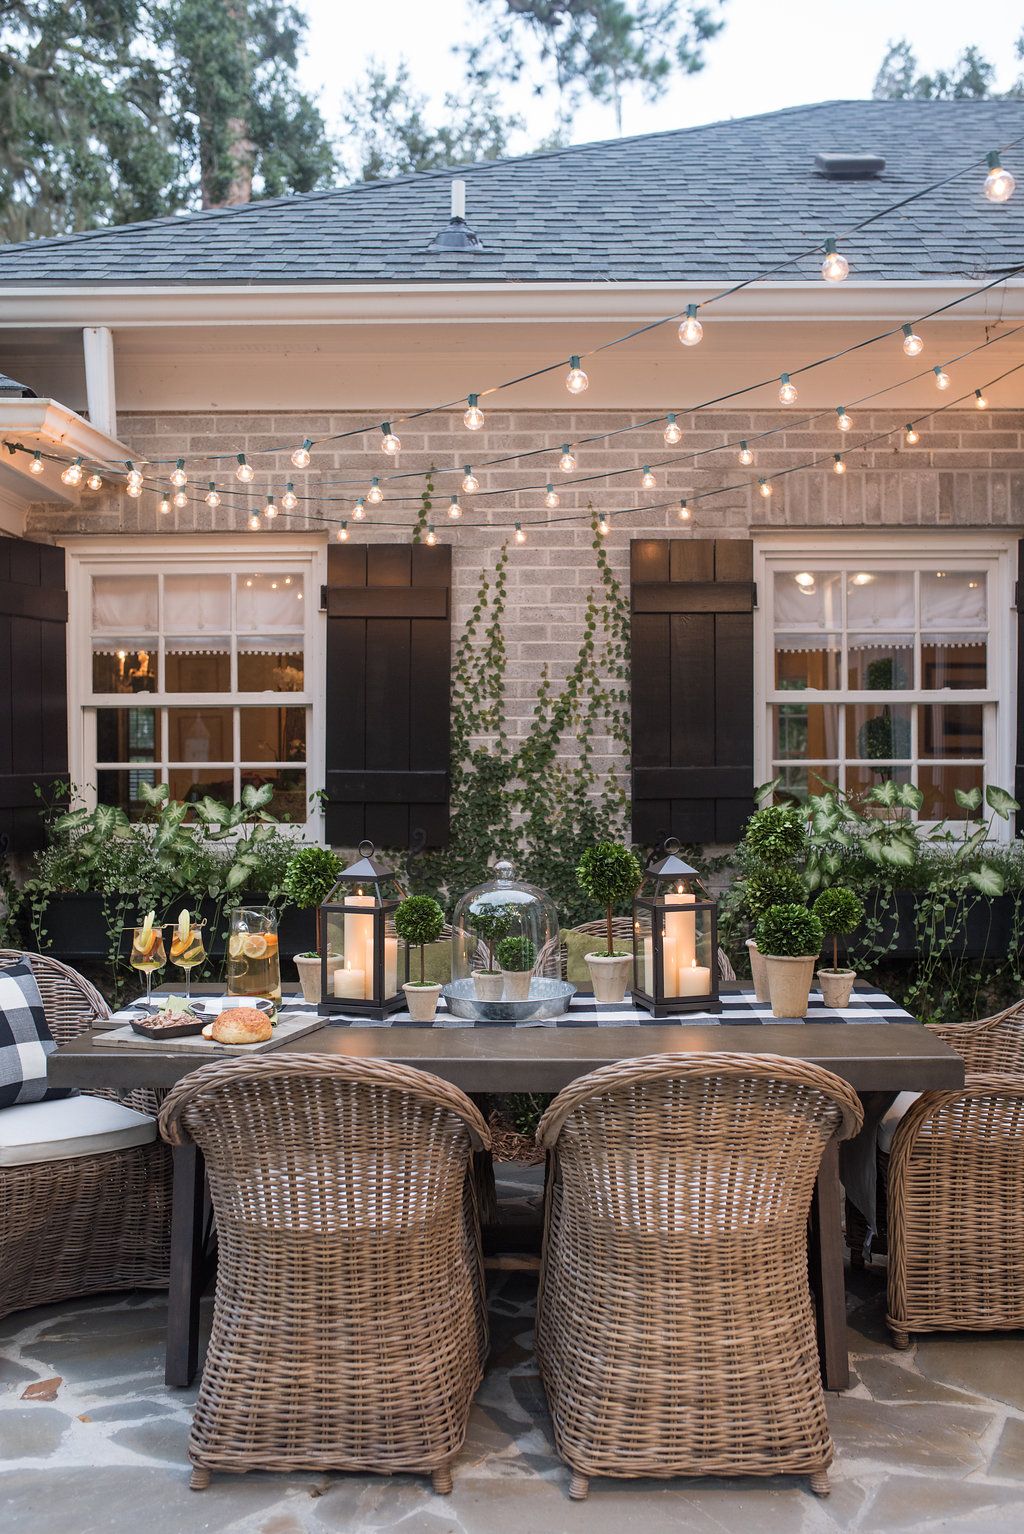 28 Backyard Lighting Ideas - How to Hang Outdoor String Lights